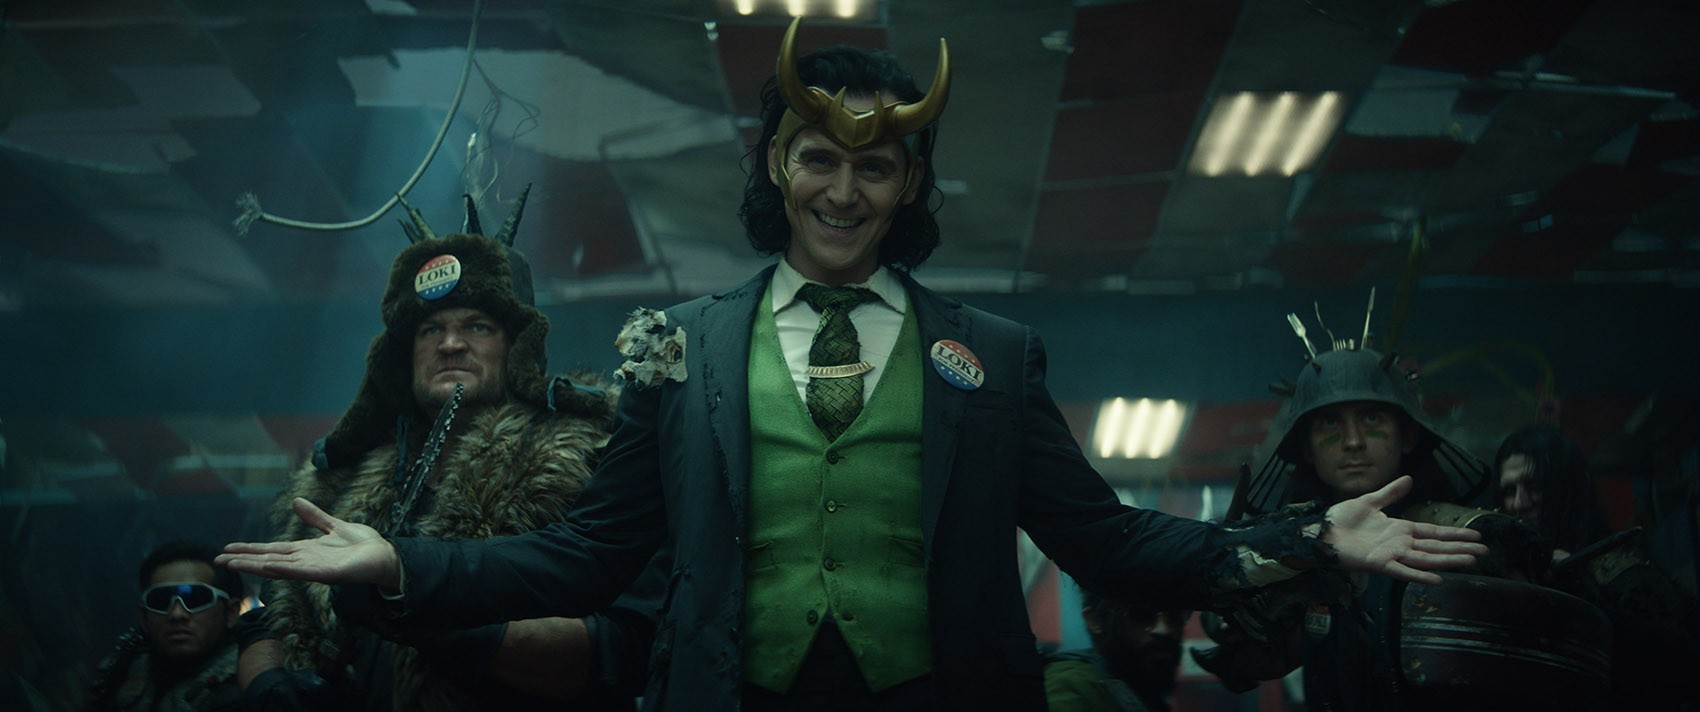 ¿Loki es de género fluido?